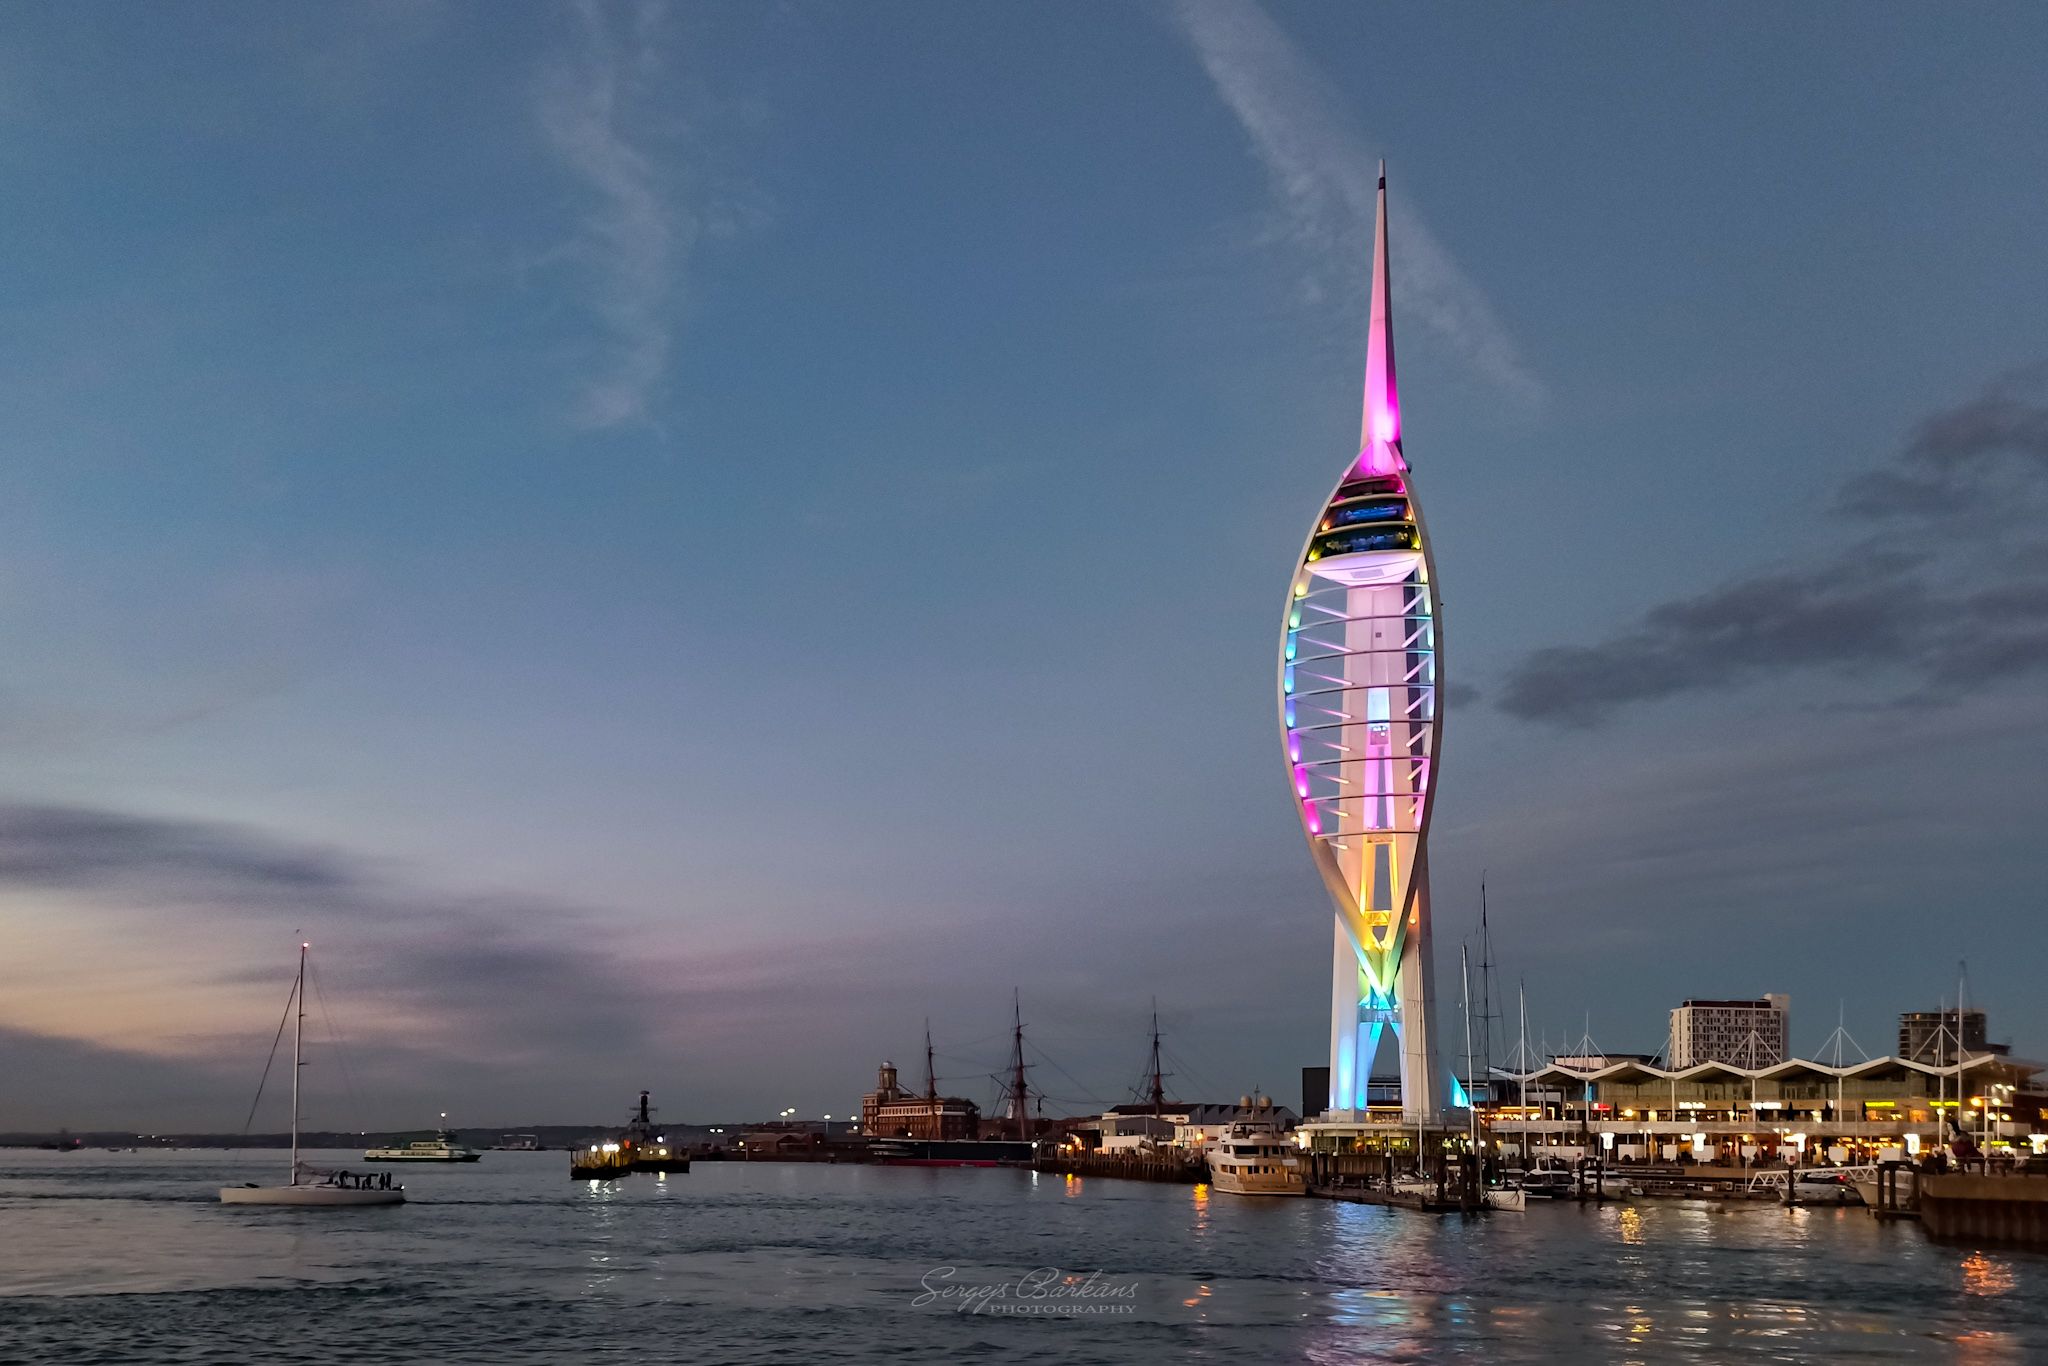 #spinnakertower #tower #portsmouth #england #uk, Sergejs Barkans